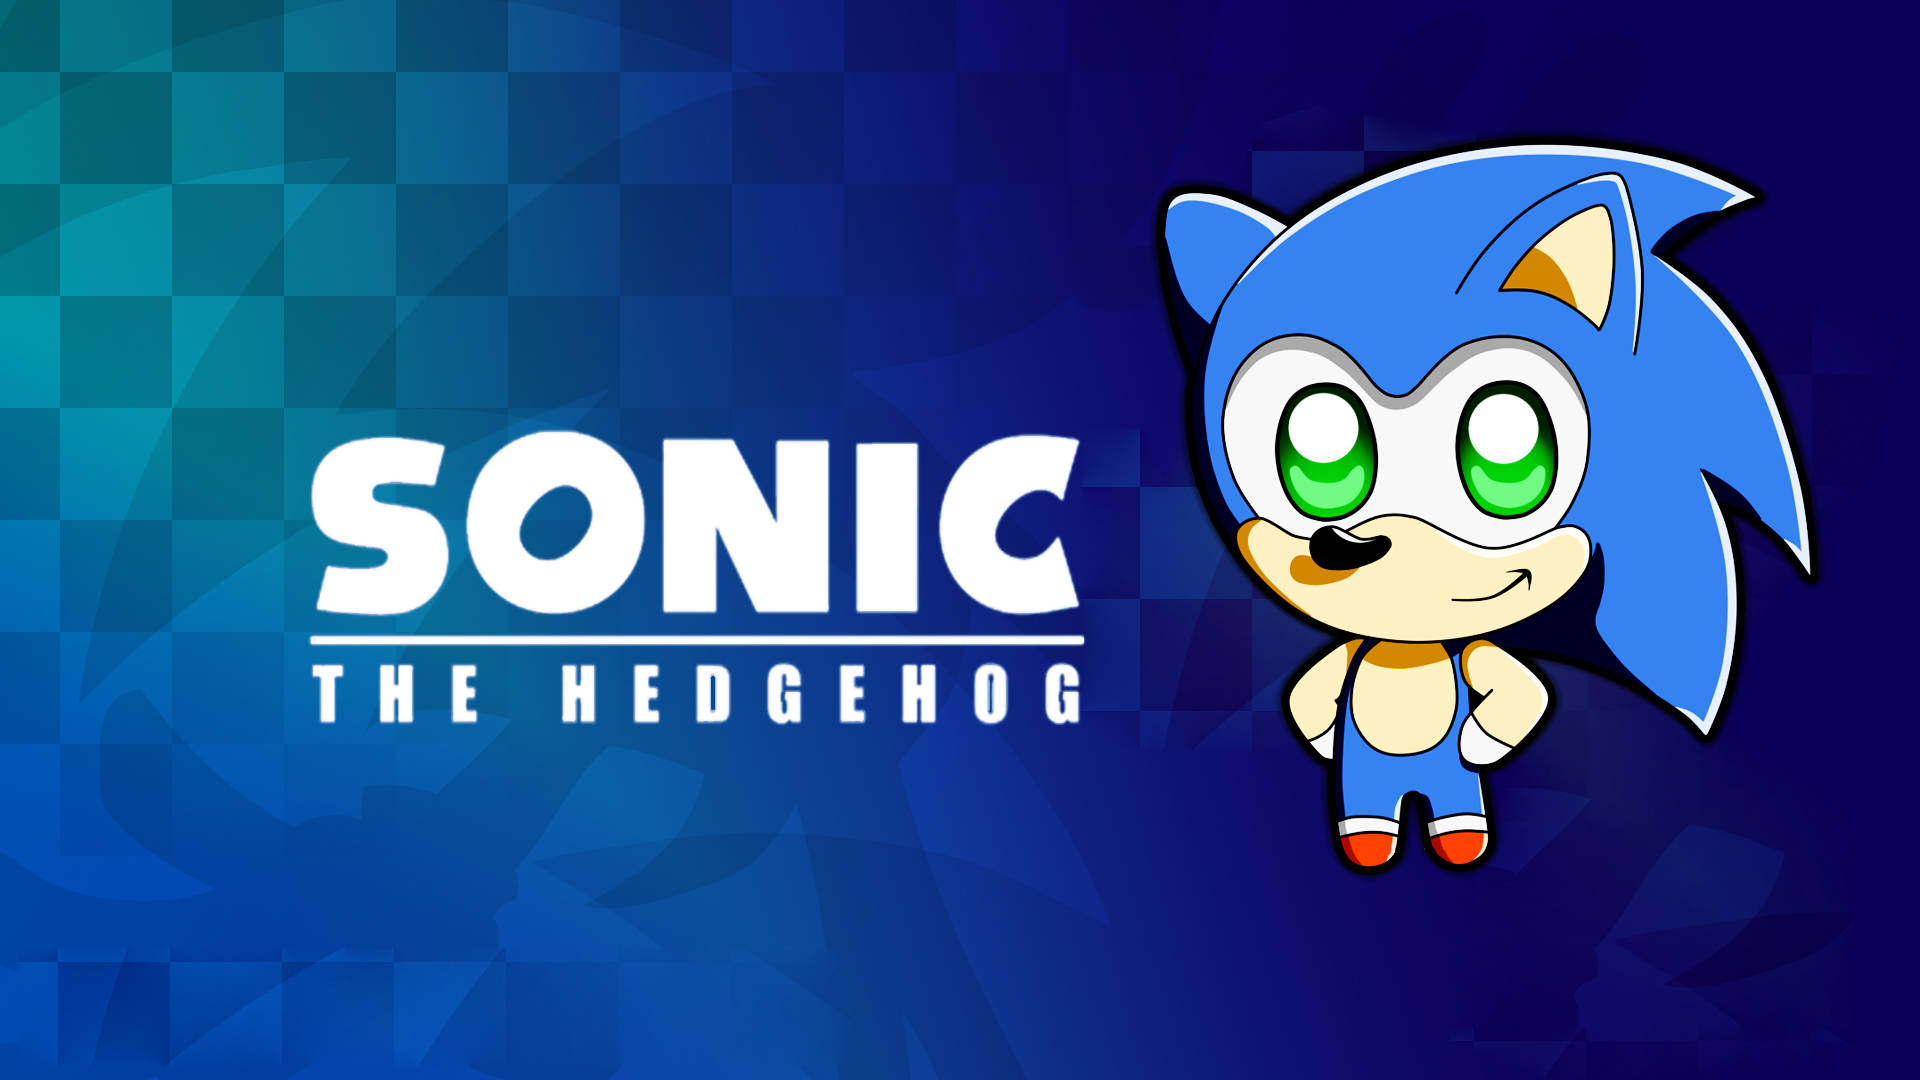 Spielals Der Ikonische Videospiel-charakter Sonic The Hedgehog. Wallpaper